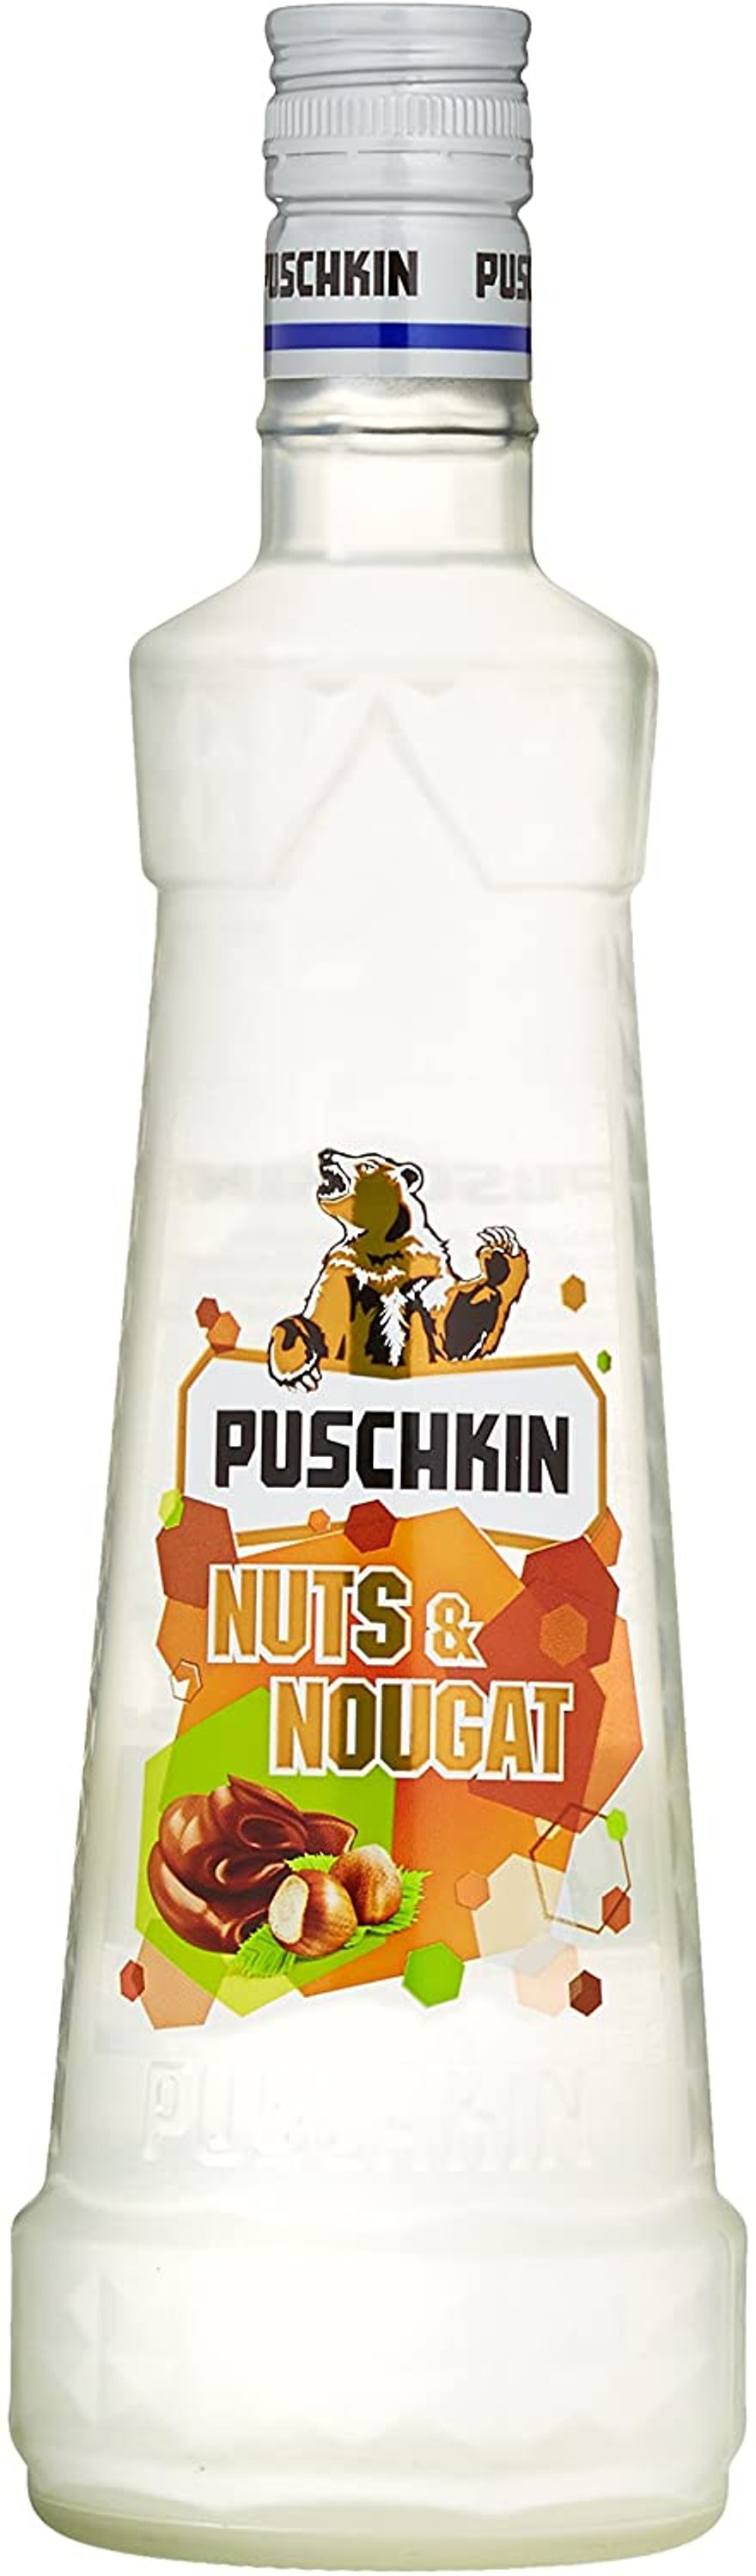 Puschkin Nuts &amp; Nougat 0.7l, alc. 17.5% by volume, vodka Germany